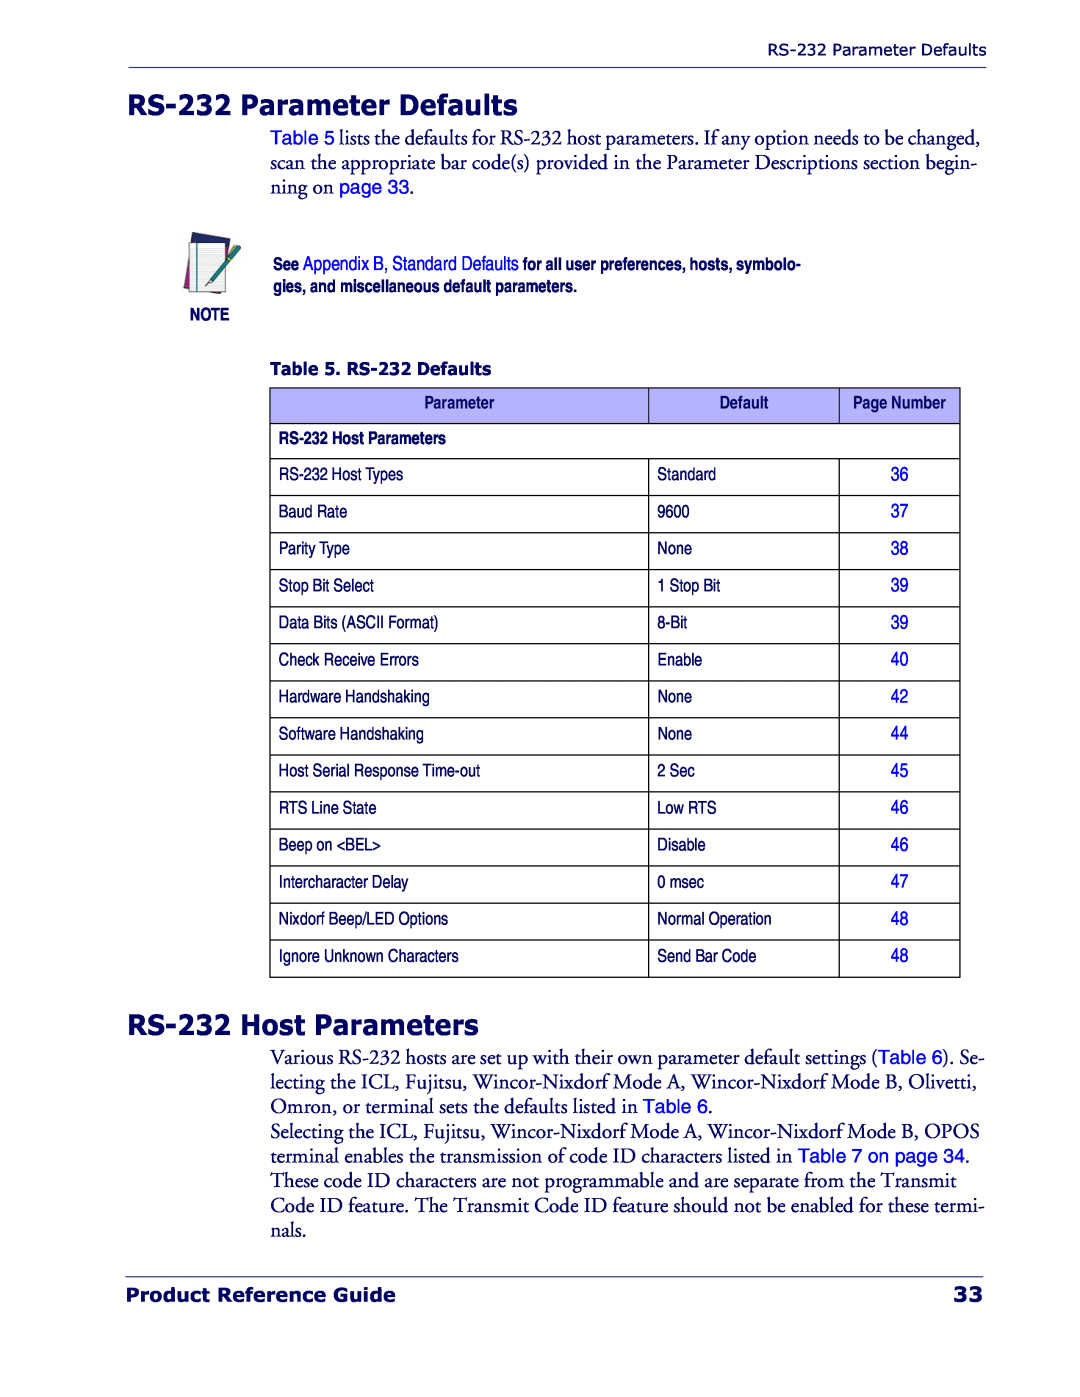 Datalogic Scanning QD 2300 manual RS-232 Parameter Defaults, RS-232 Host Parameters 